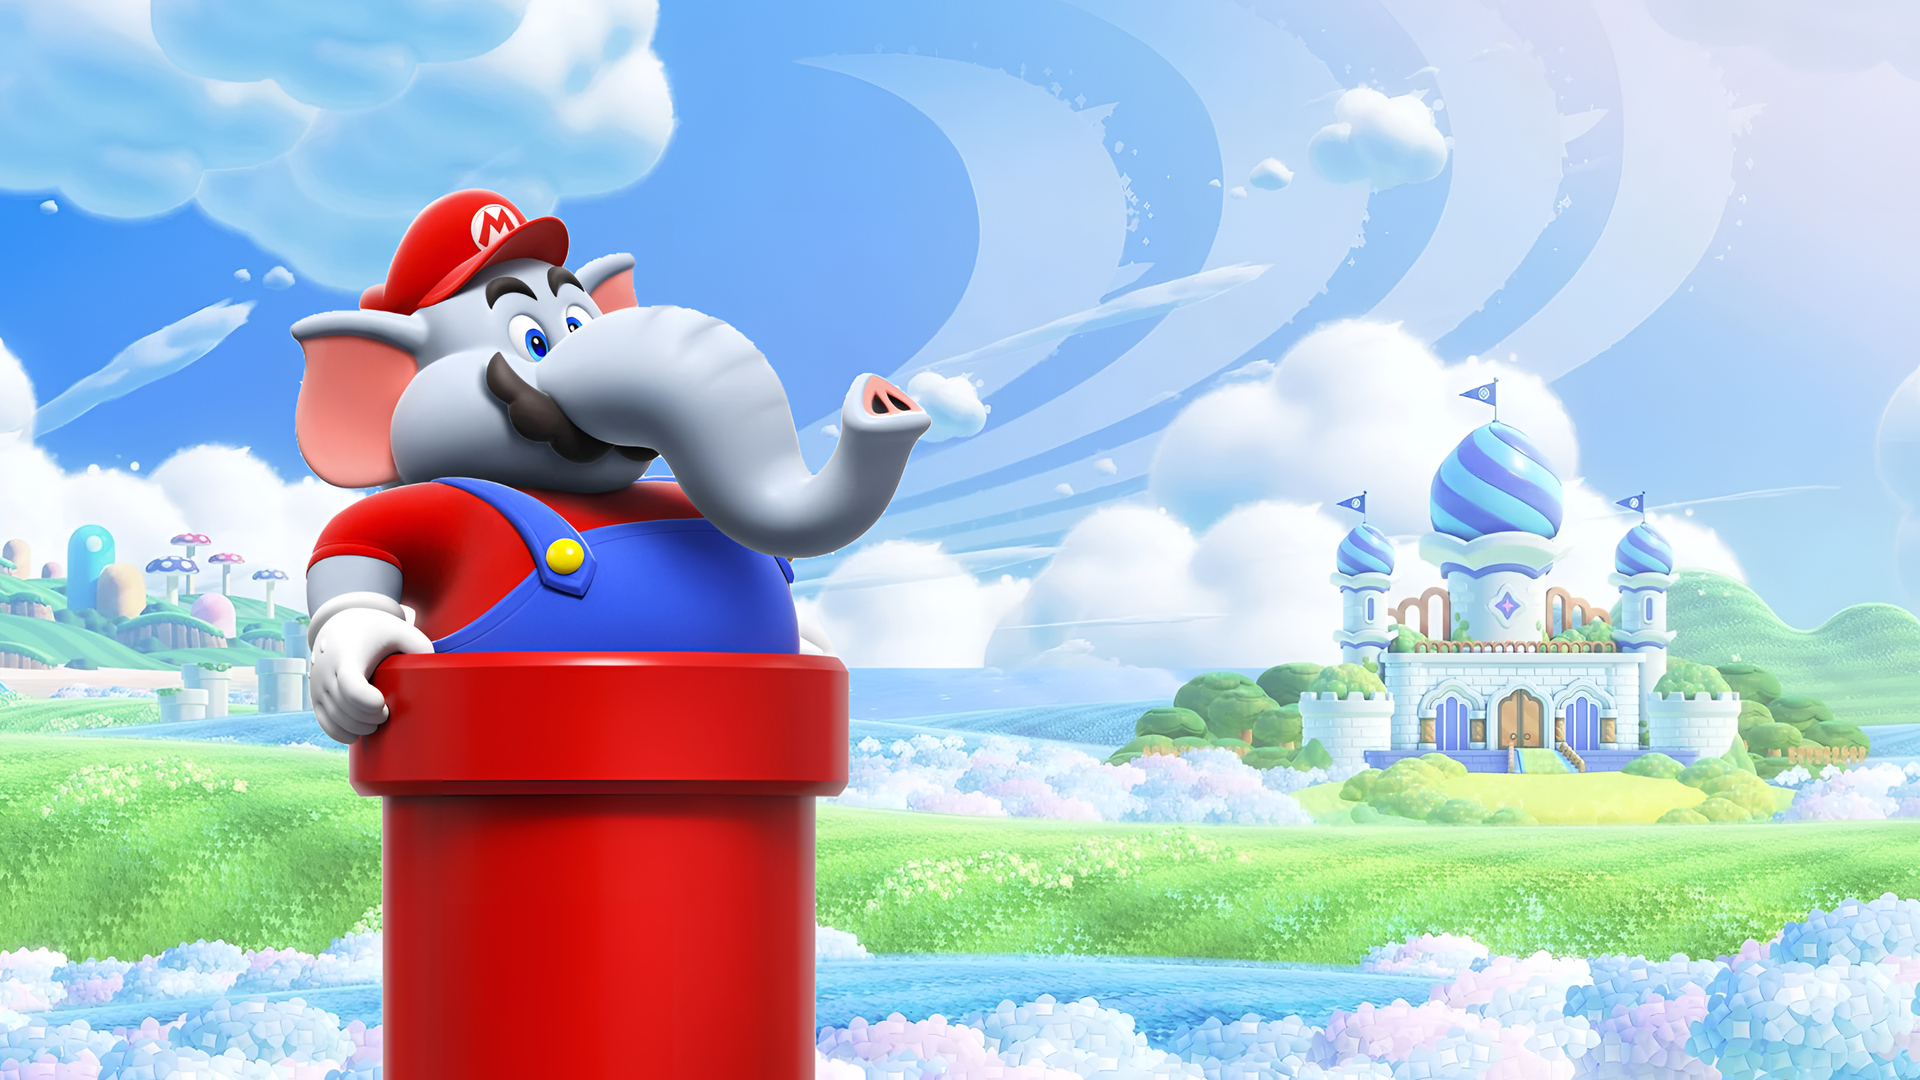 Super Mario Bros. Wonder - 5 Minutes of Gameplay and Screenshots (HD) 